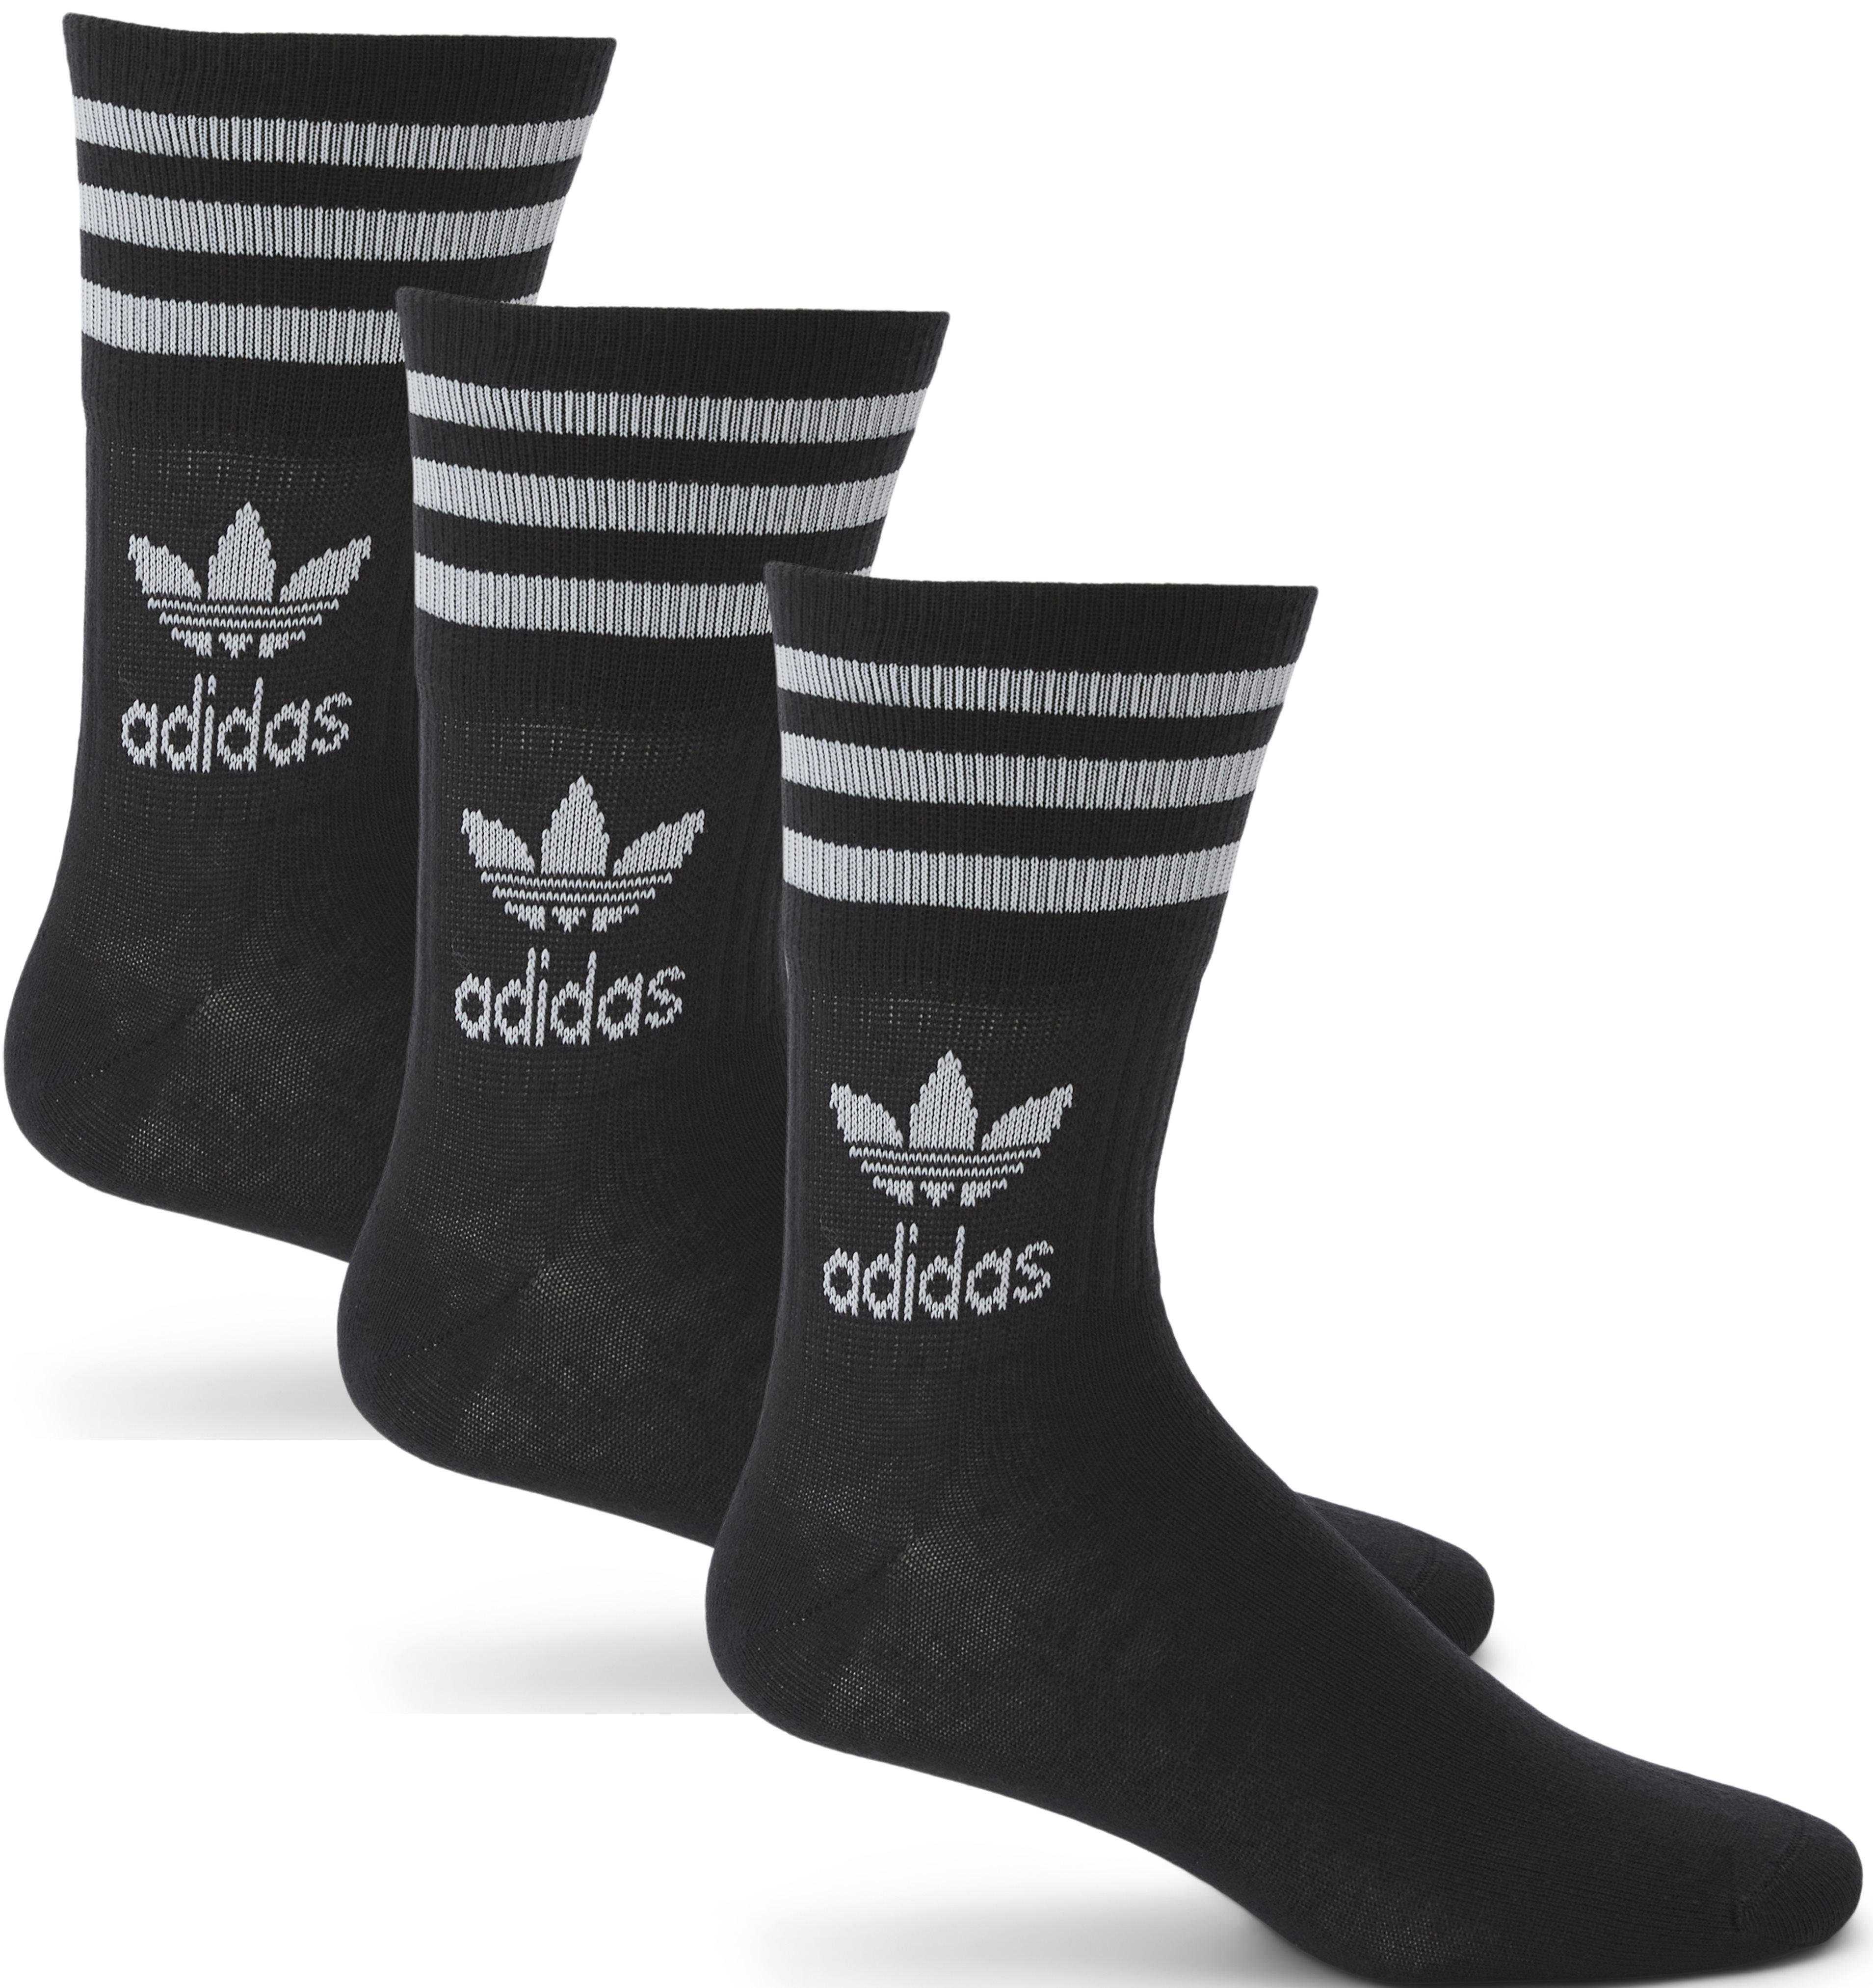 Adidas Originals Socks MID CUT CRW SCK Black